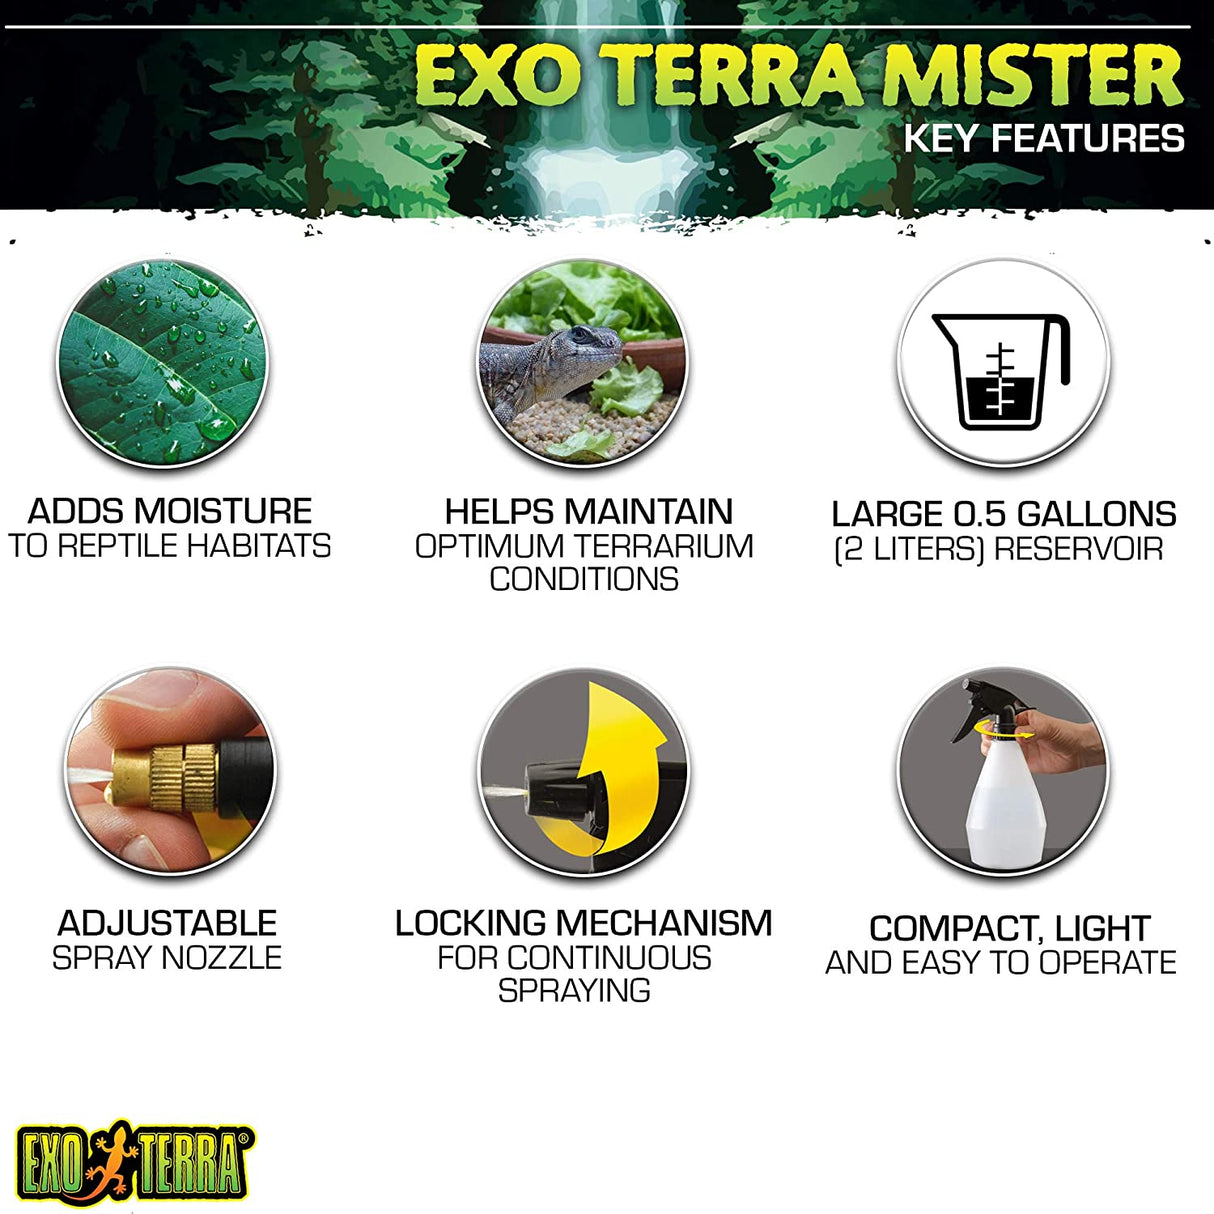 3 count Exo Terra Mister Portable Pressure Sprayer